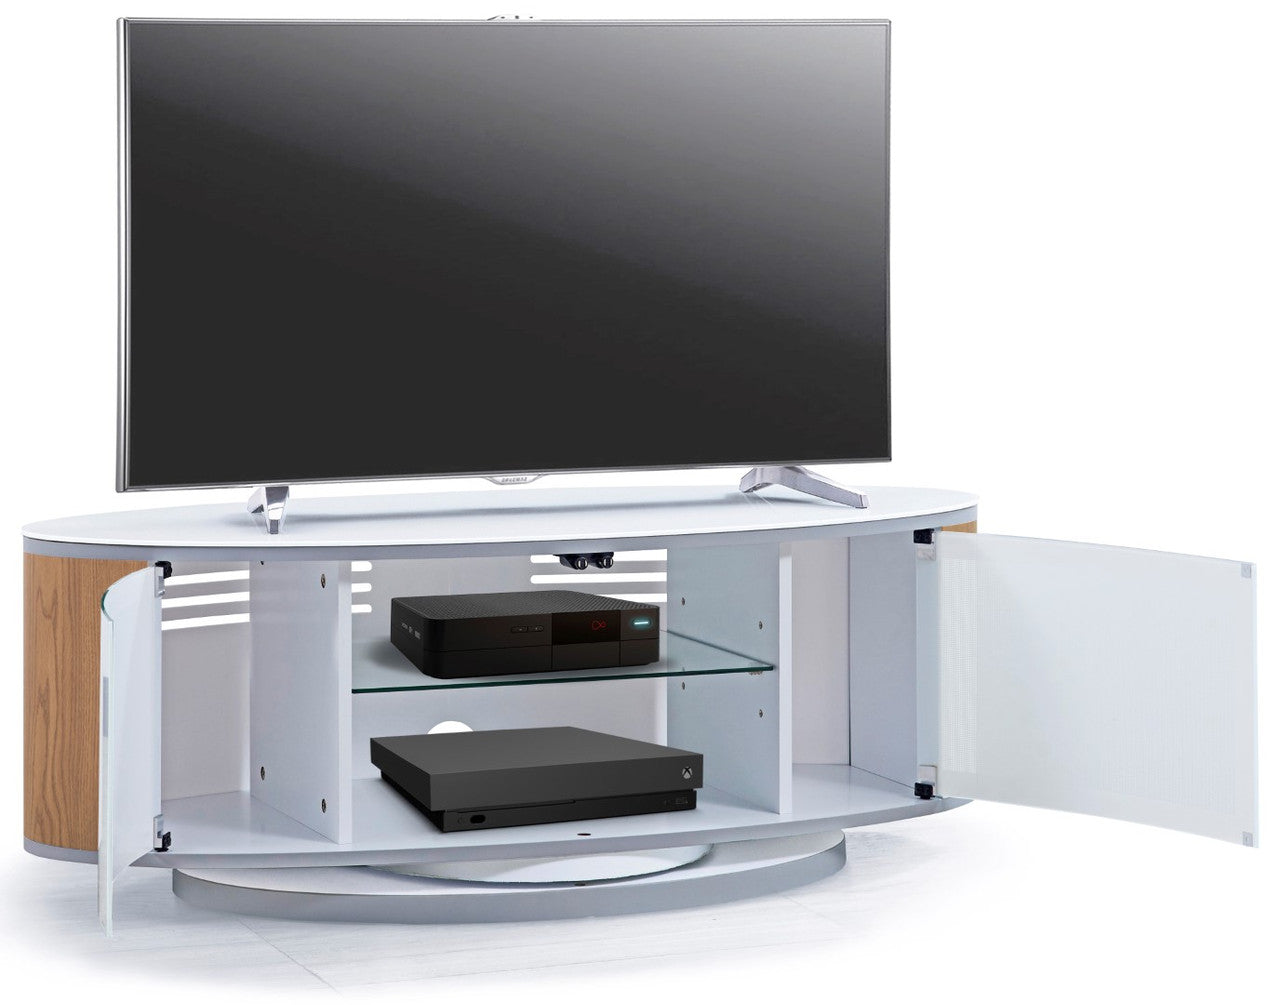 White/oak oval TV stand for living room